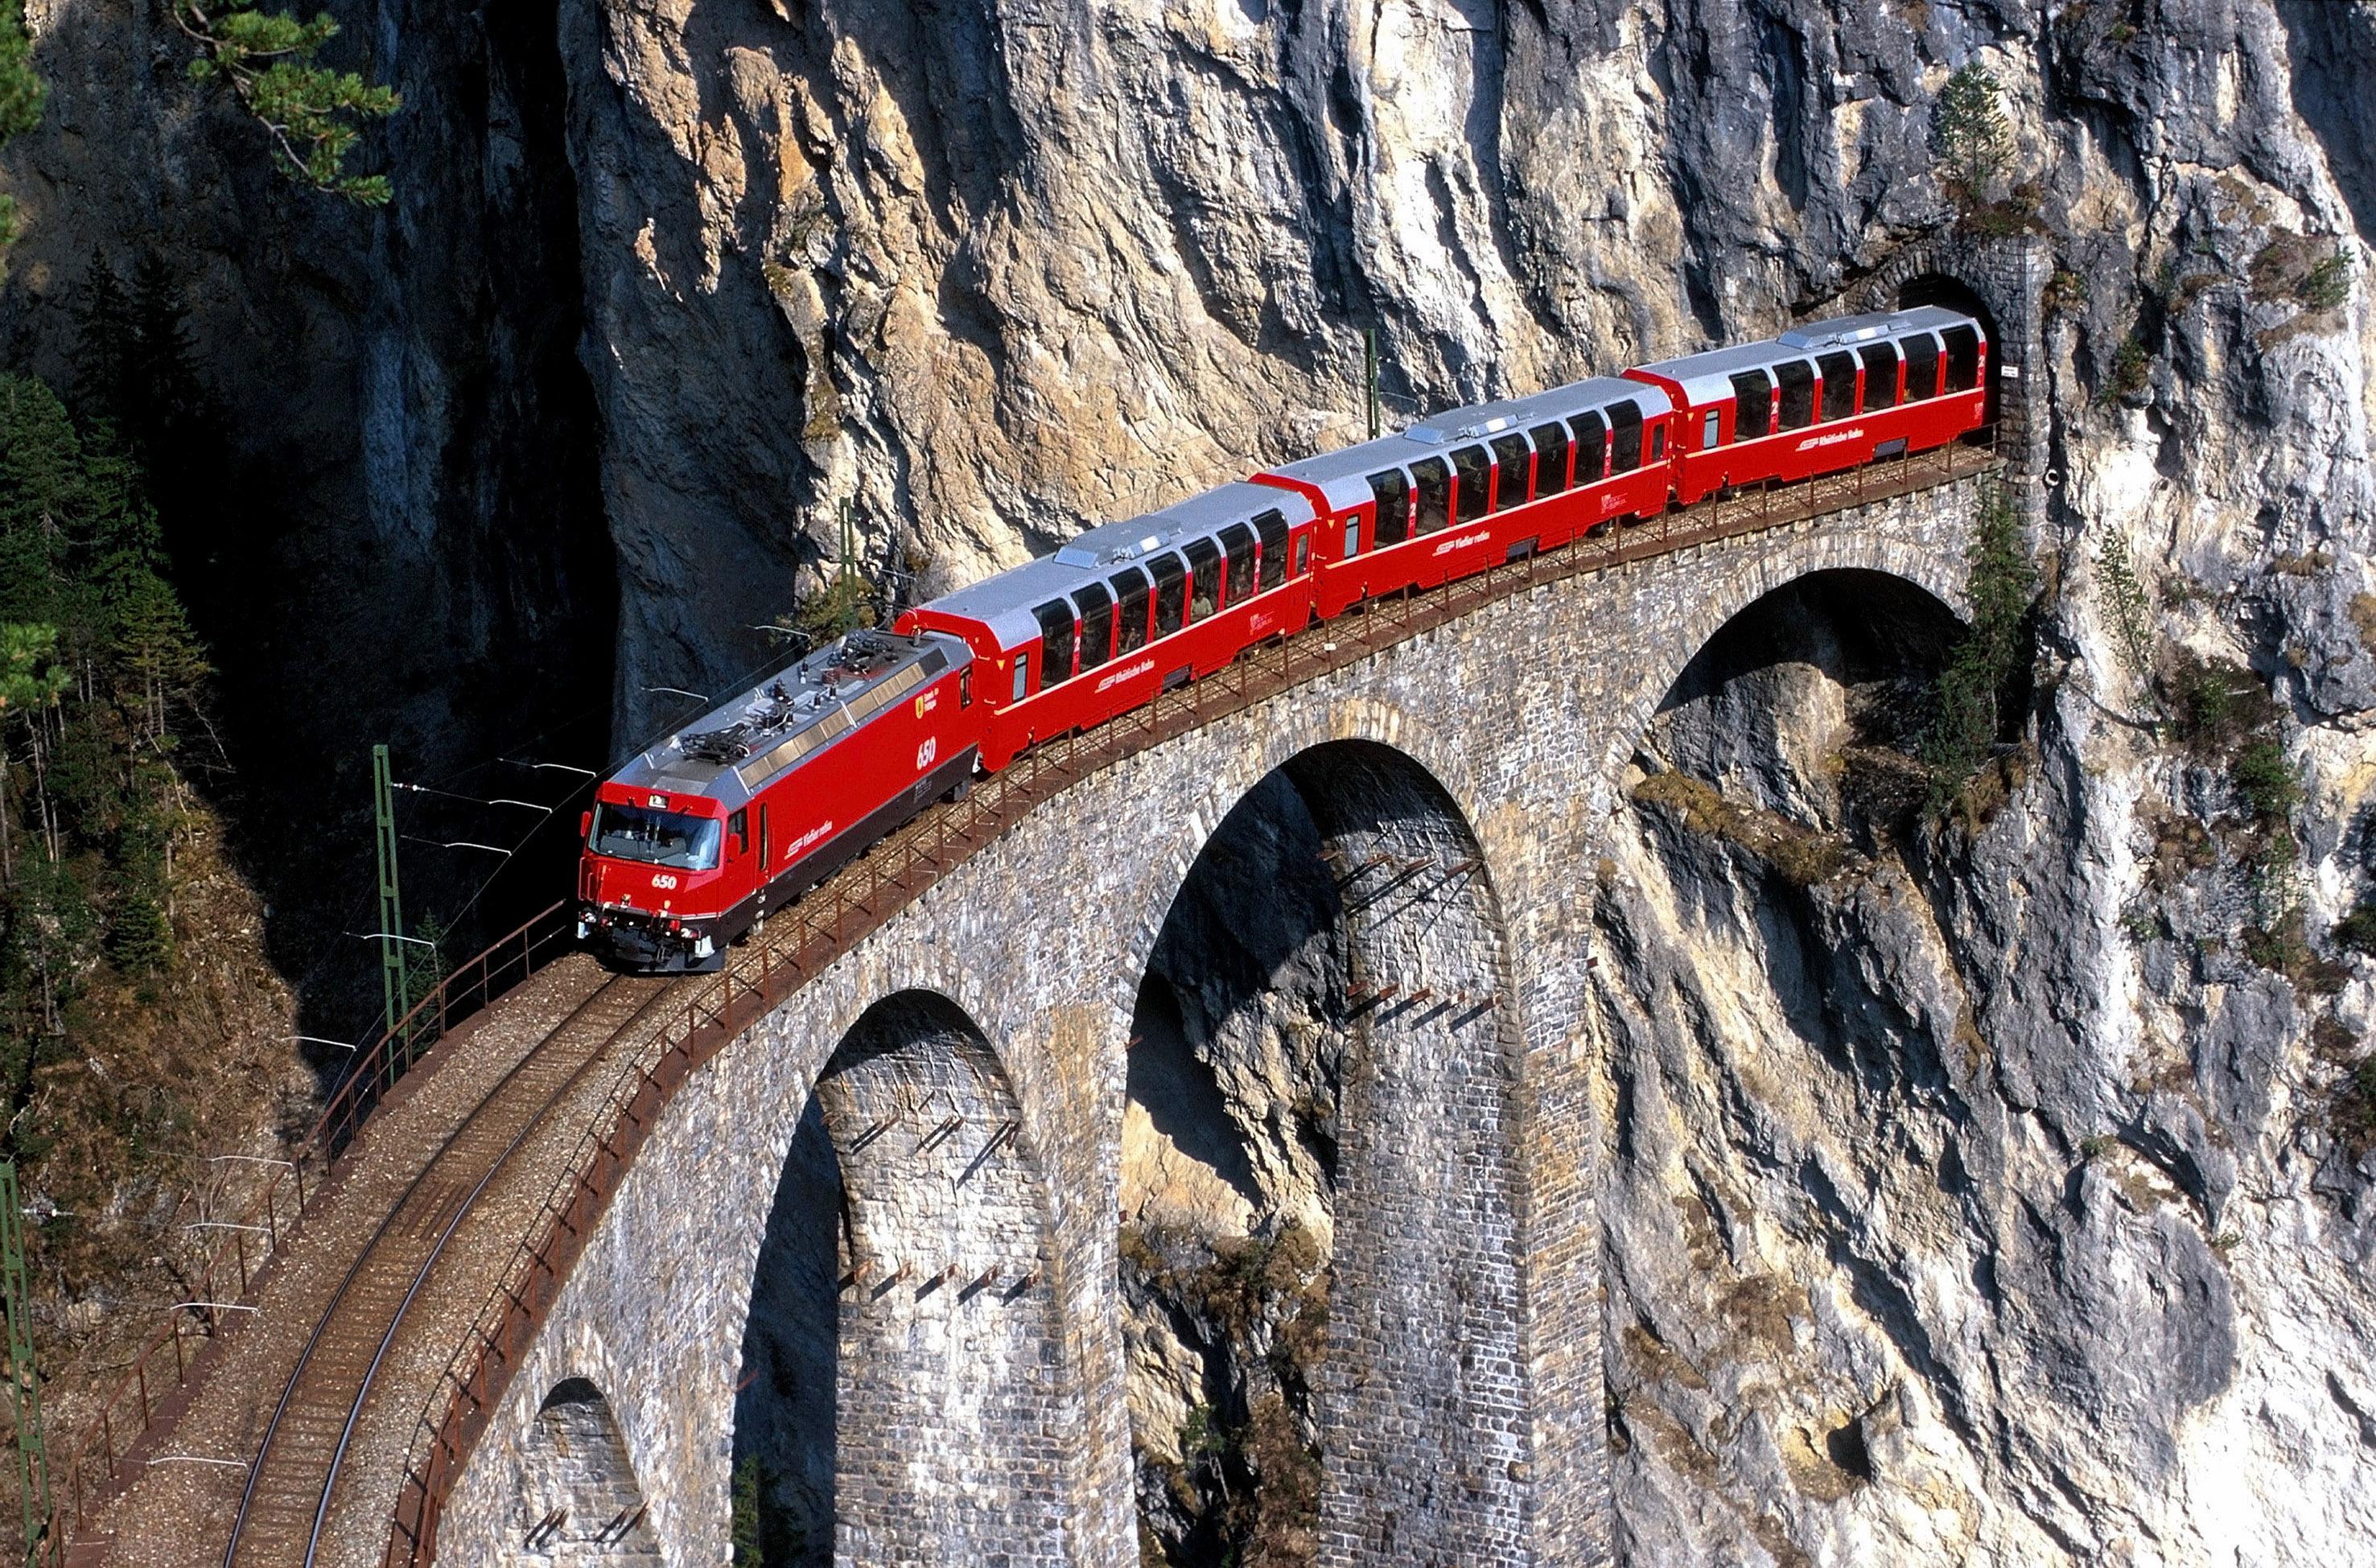 Трип жд. Ретийская железная дорога Швейцария. Виадук Ландвассер Швейцария. Железная дорога Горнерграт в Швейцарии. Ретийская железная дорога Швейцария поезда.